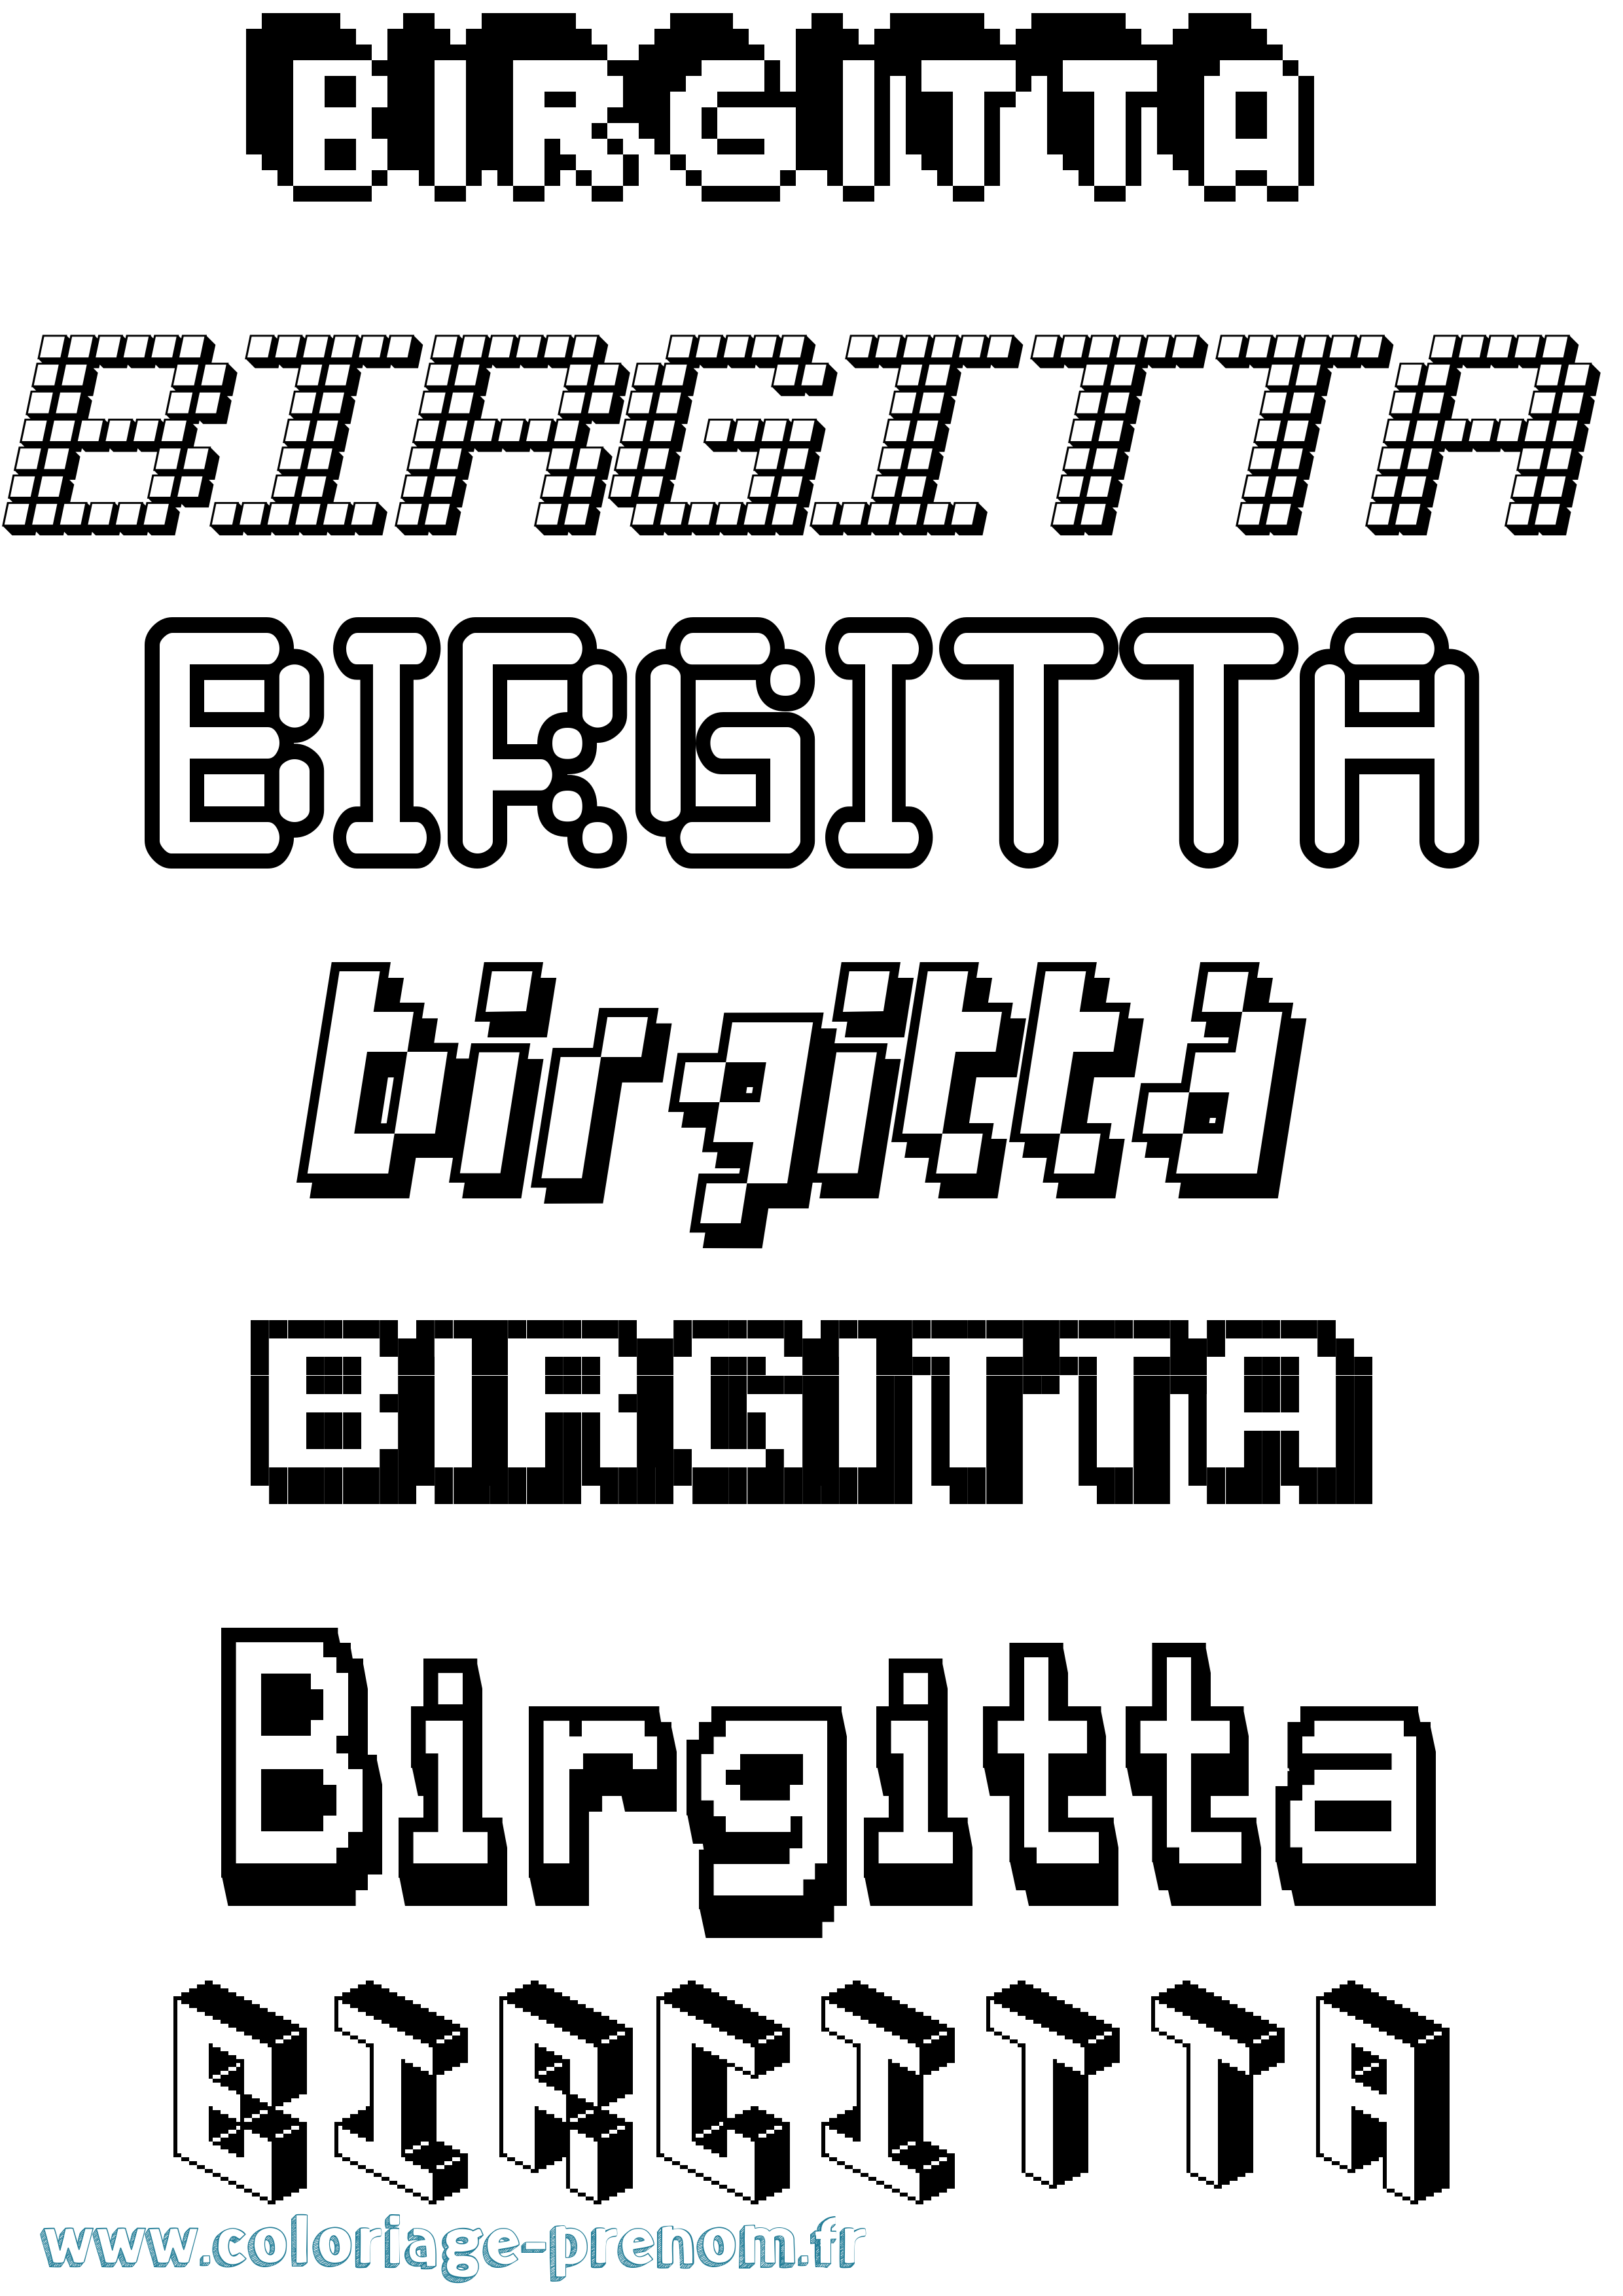 Coloriage prénom Birgitta Pixel